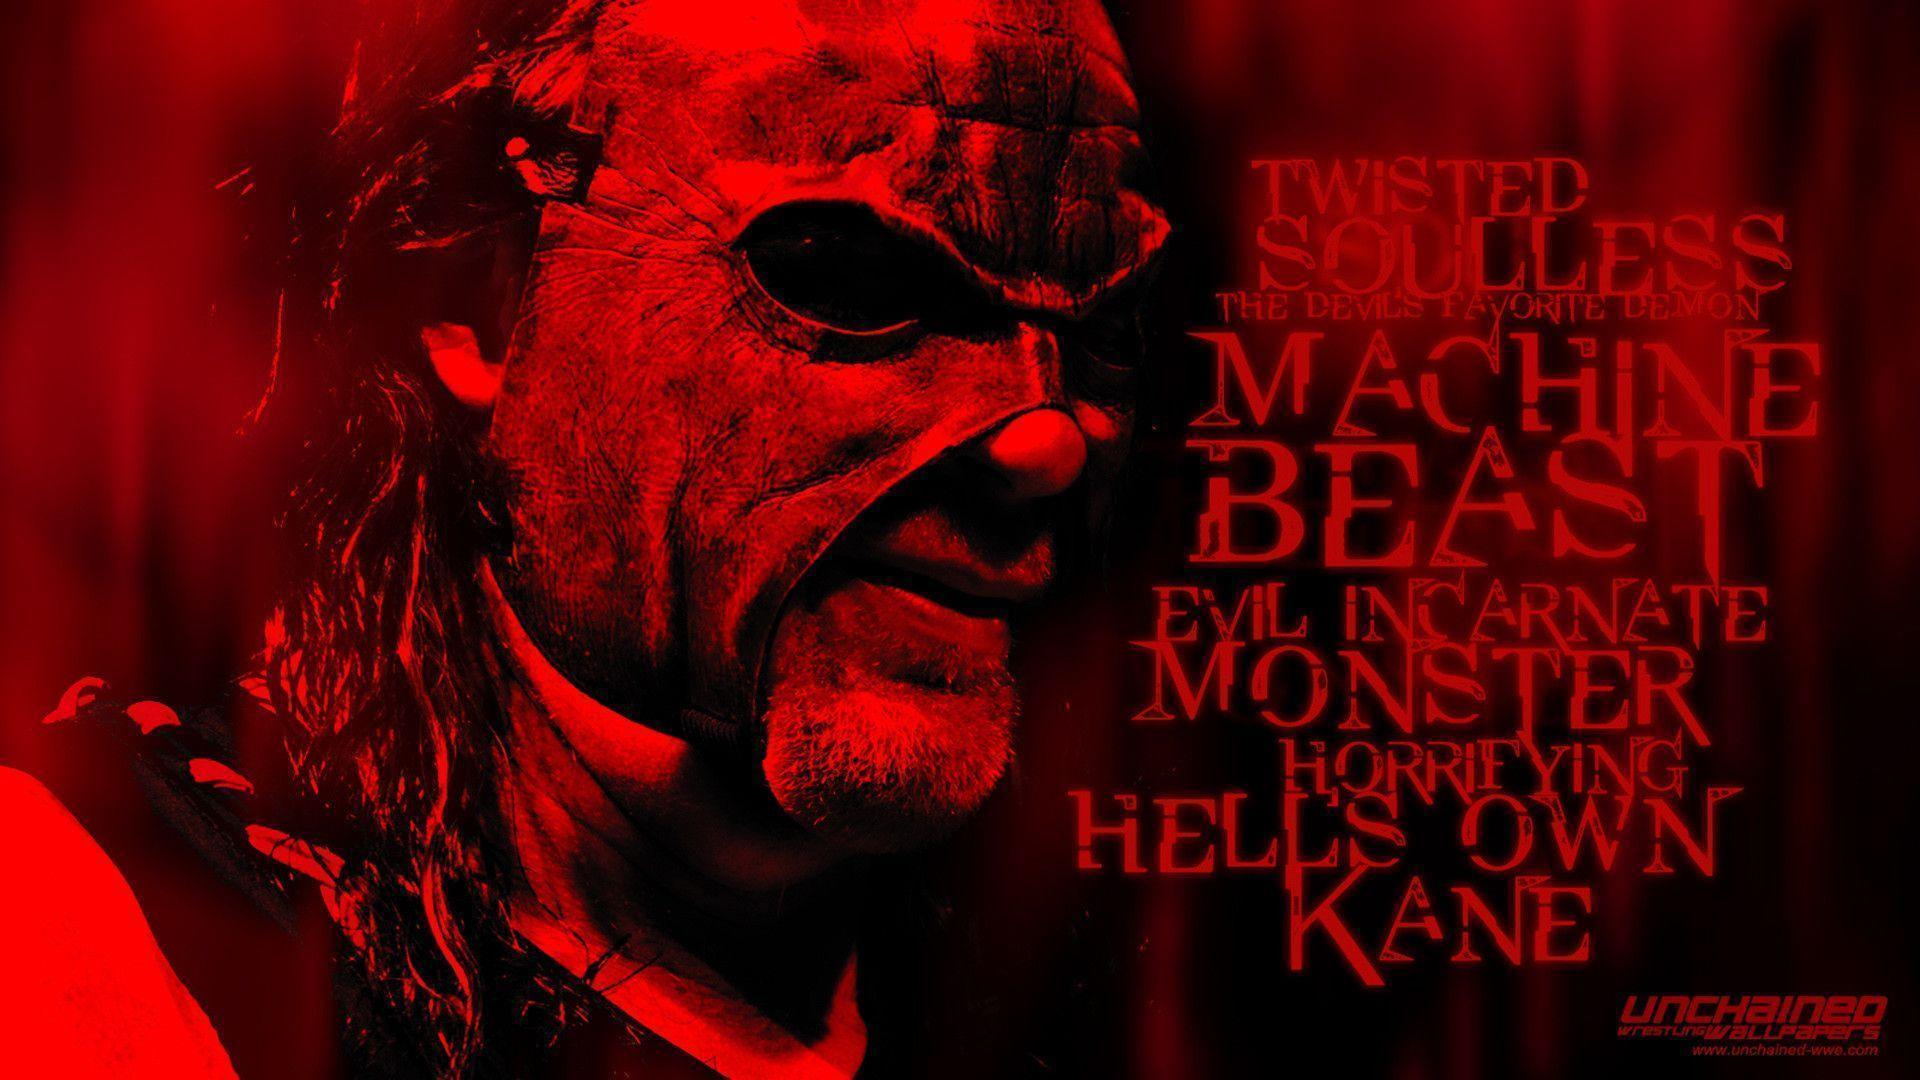 WWE Kane "Resurrected" Wallpaper Unchained WWE.com WWE